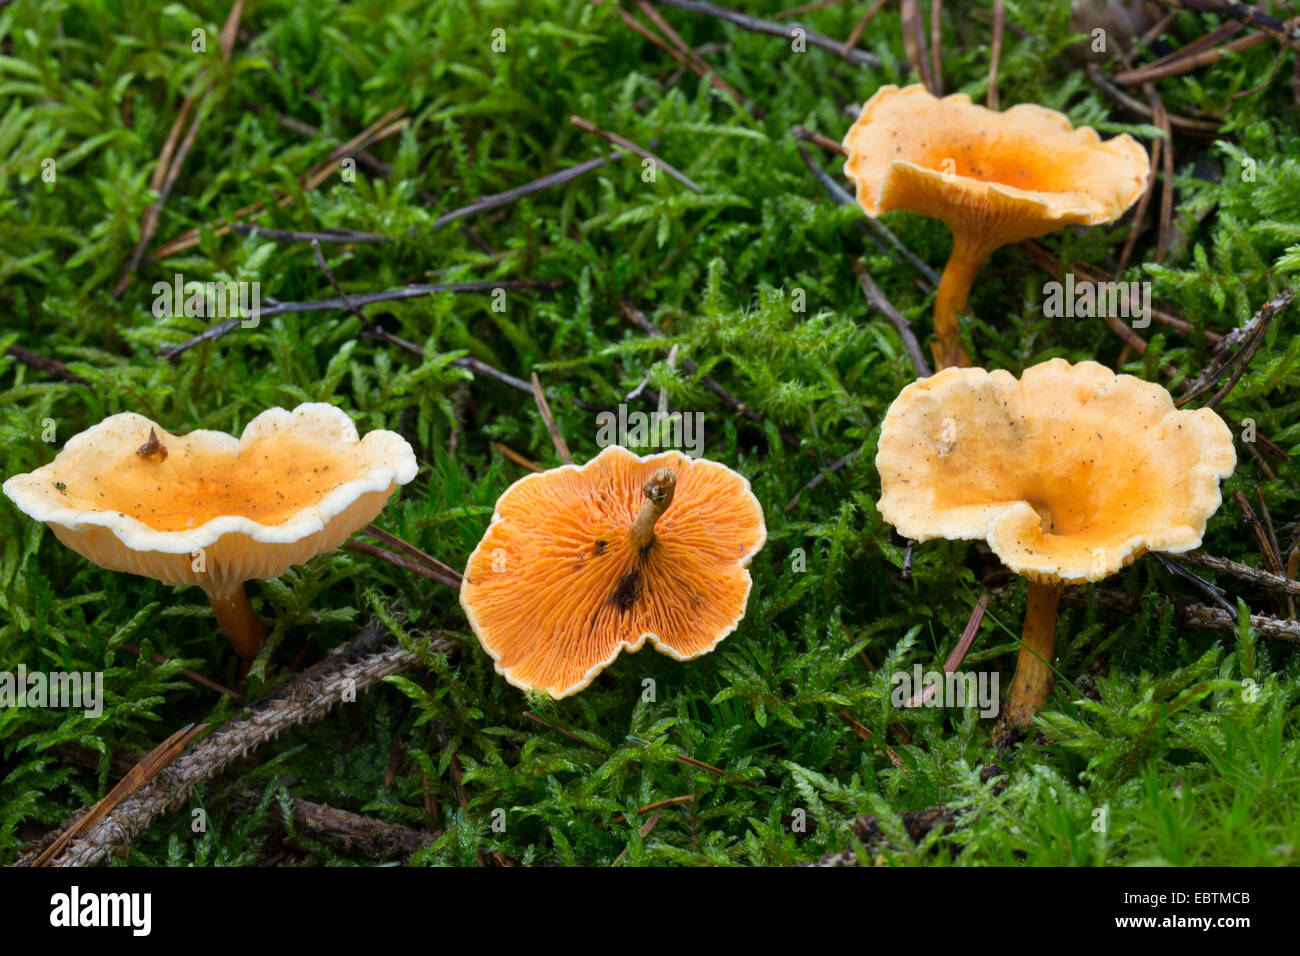 False Chanterelle (Hygrophoropsis aurantiaca), fungi in moss, Germany Stock Photo